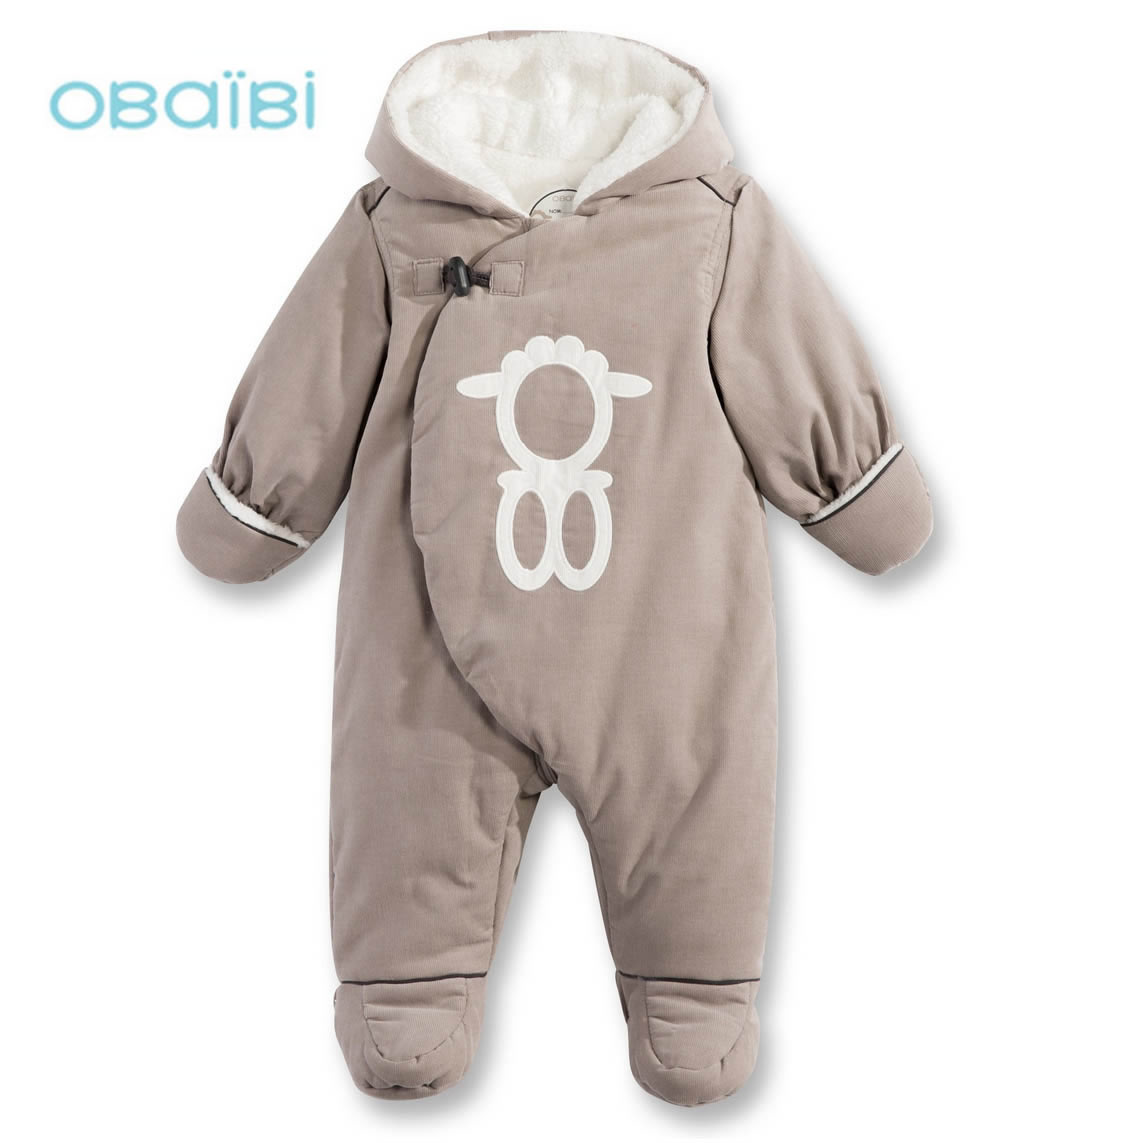 OBAIBI2016冬季新款宝宝外出服新生儿连体衣婴儿爬服抱衣加绒加厚